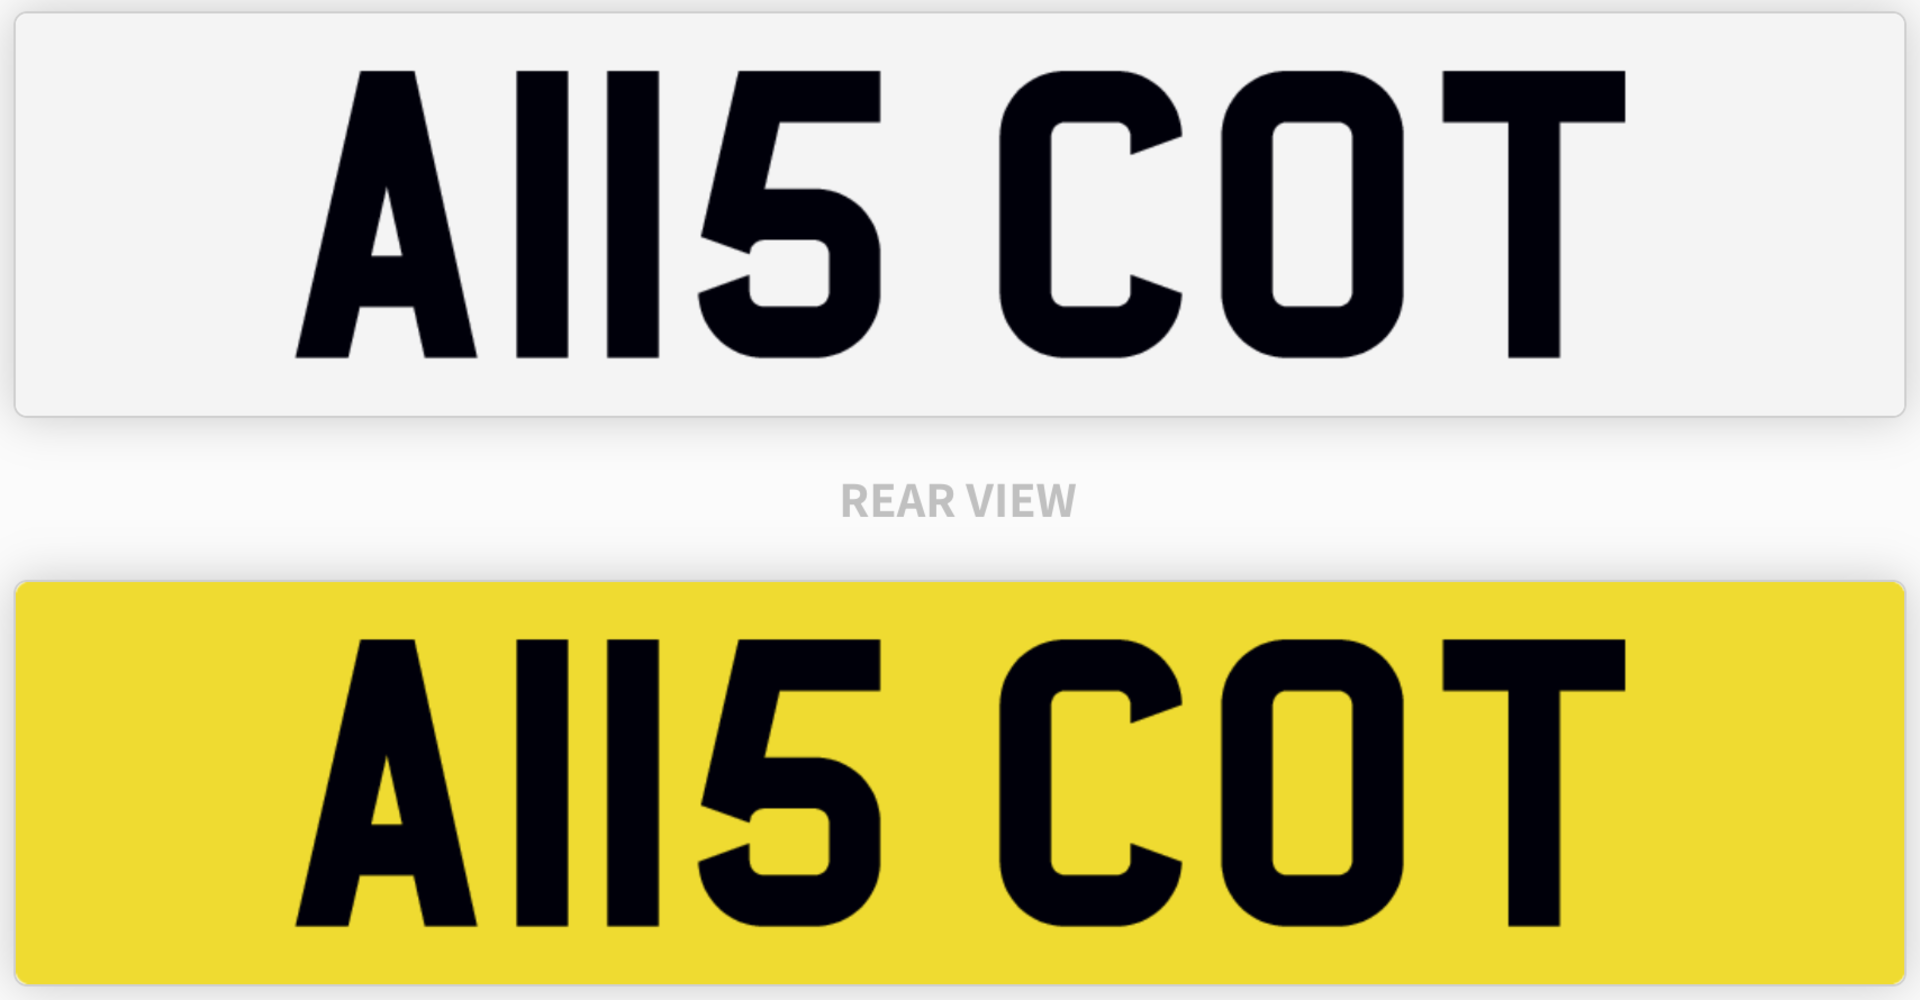 A115 COT number plate / car registration